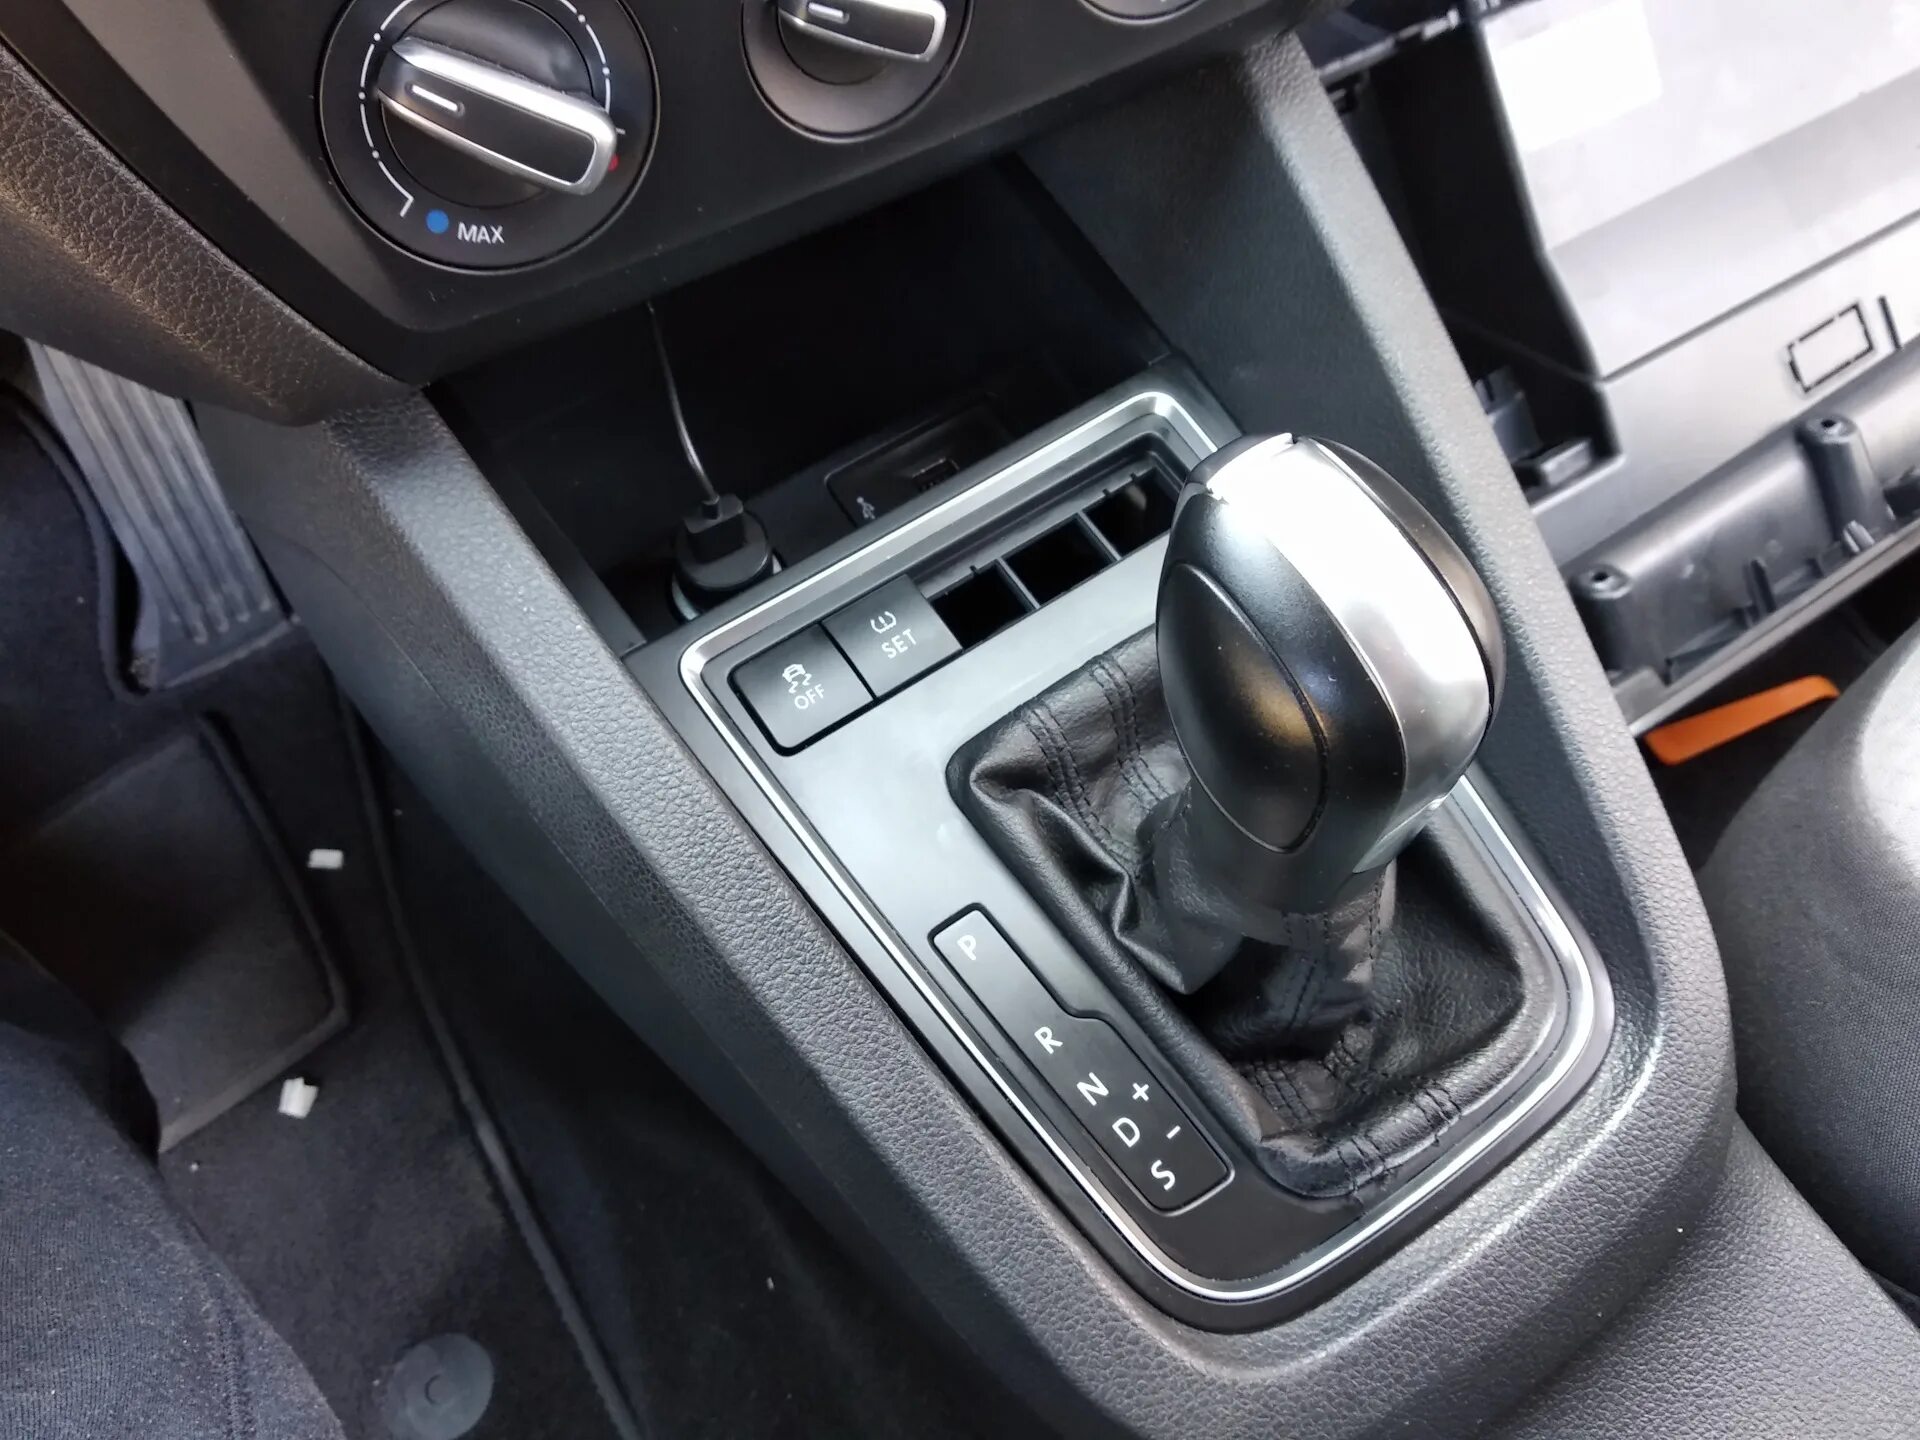 Ручка АКПП Джетта 6. Кнопка ESP Volkswagen Jetta 6. Фольксваген Джетта 2017 коробка автомат. VW Jetta 6 ESP. Volkswagen jetta автомат